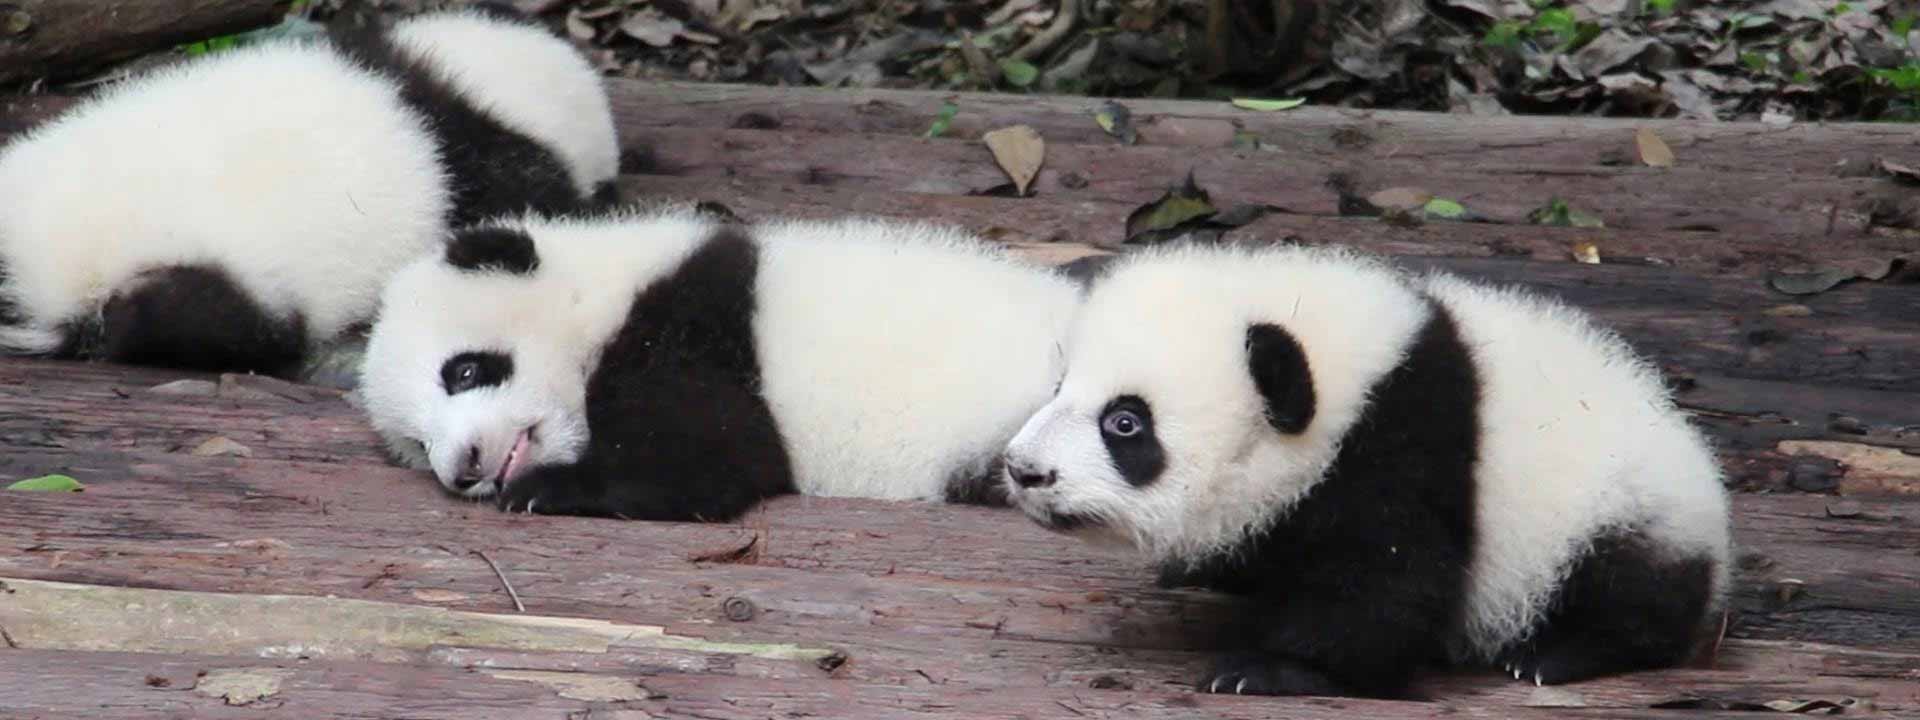 See Giant Panda, China Family Tours